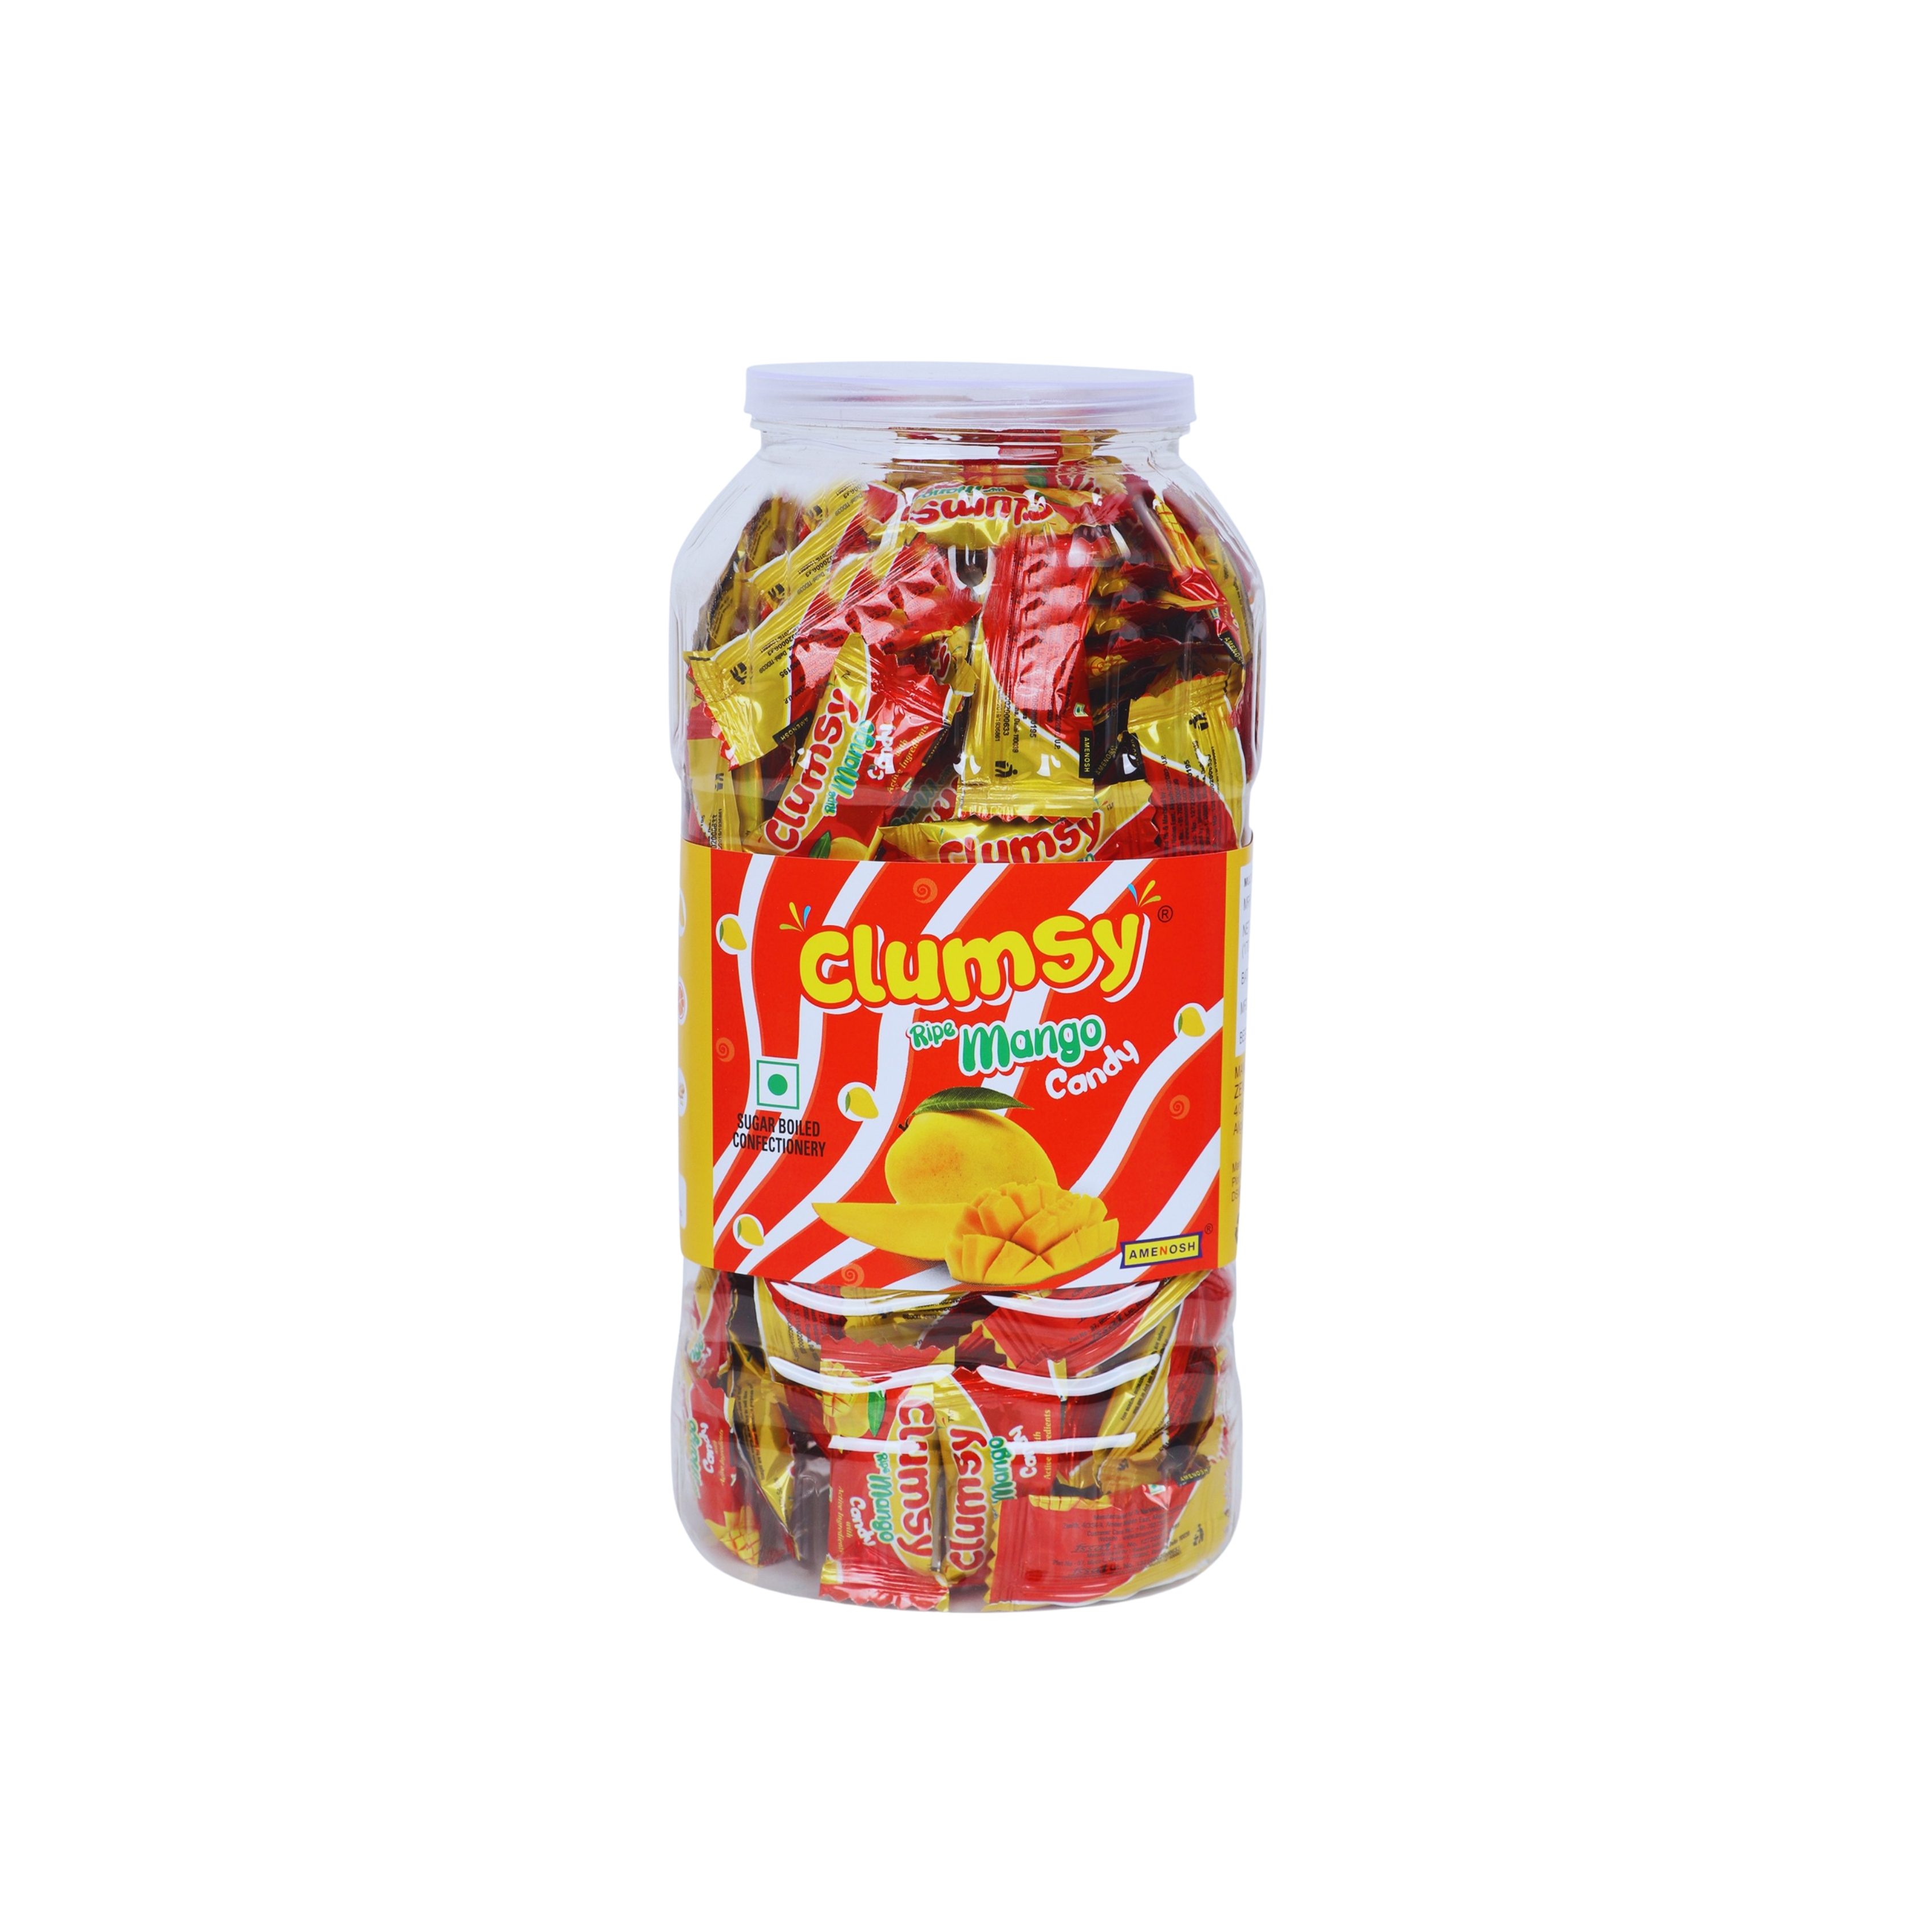 Clumsy Ripe Mango candy Jar, 170 candy units